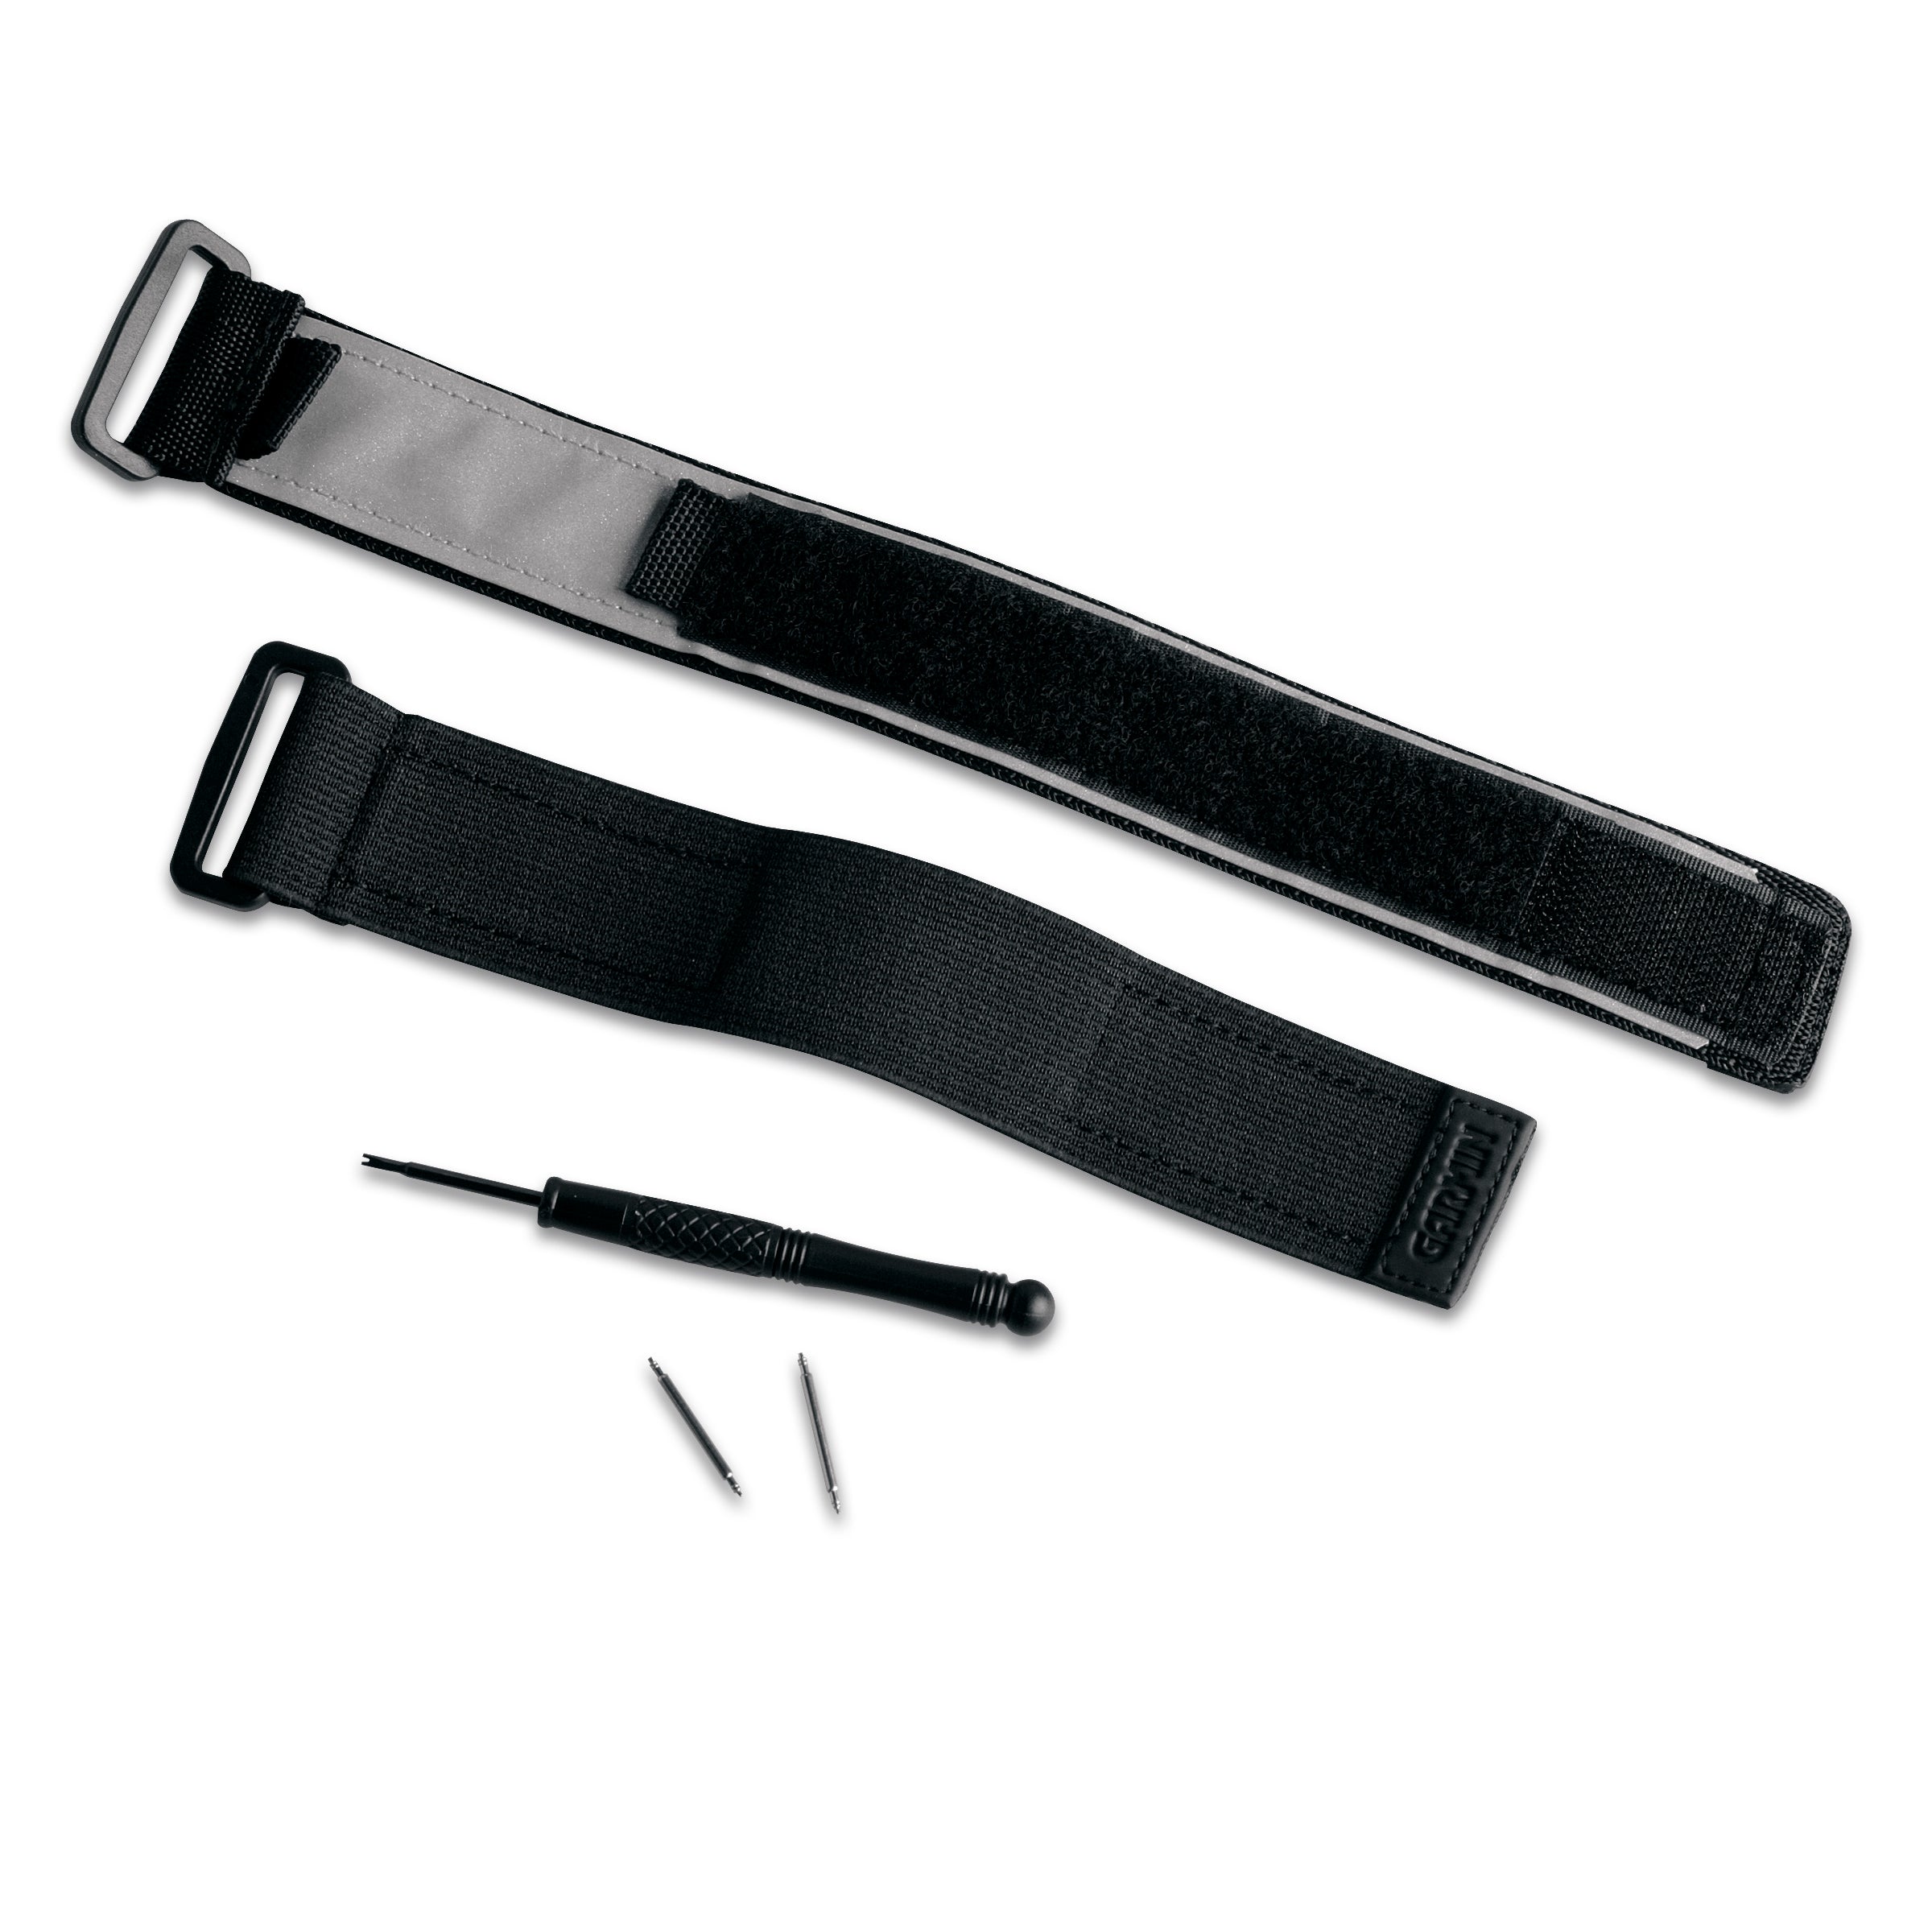 Garmin Strap with extension strap